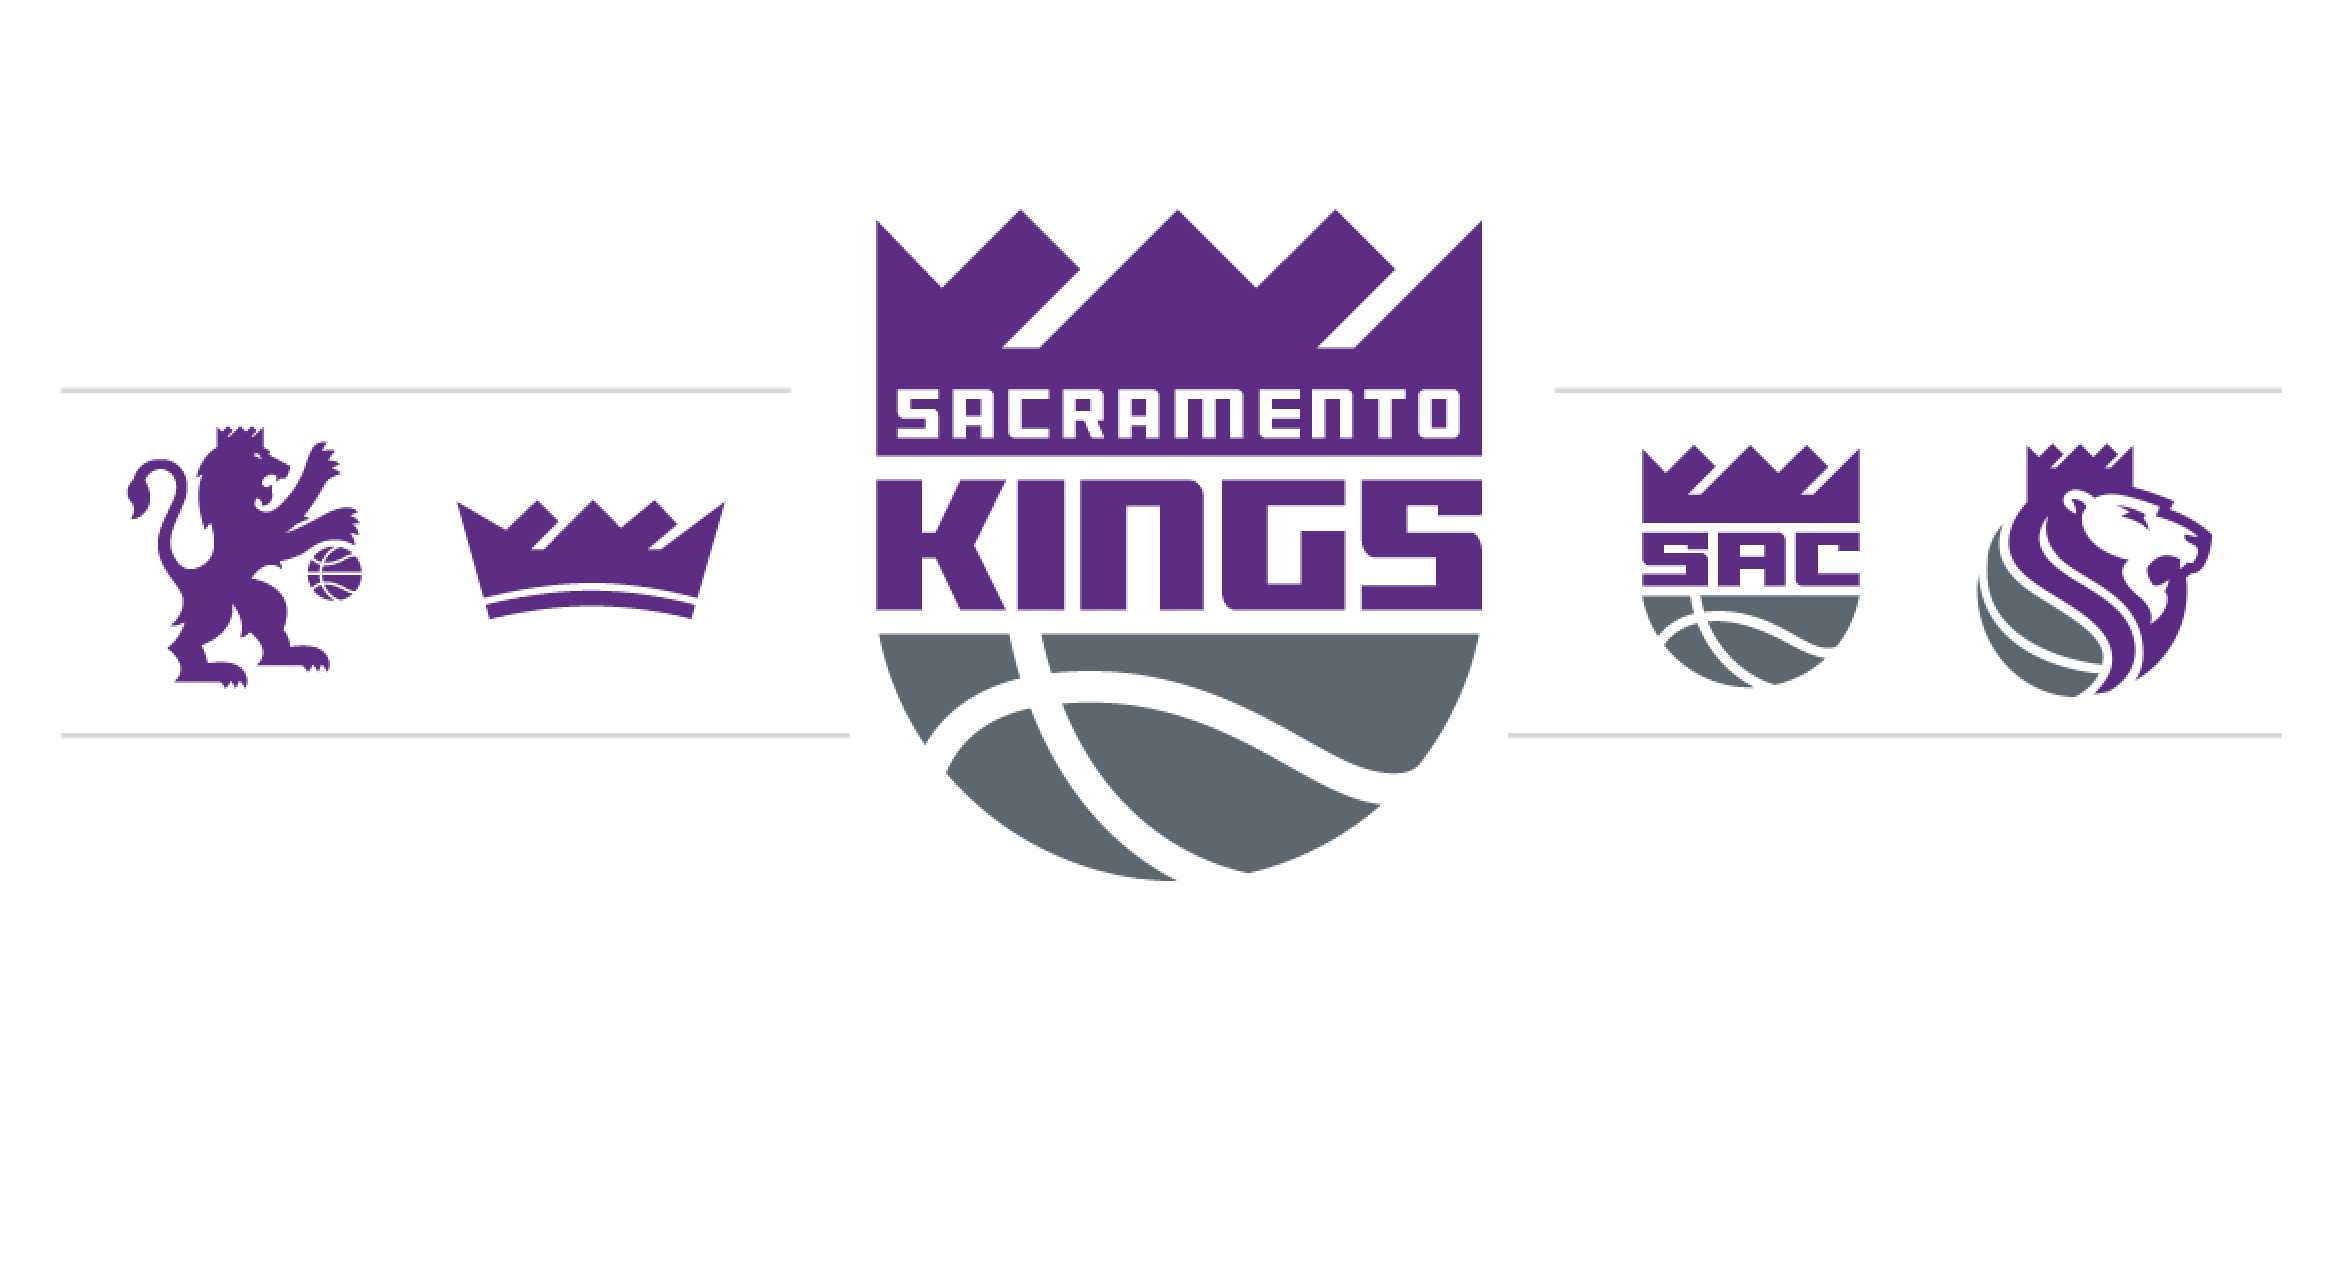 Nice Images Collection: Sacramento Kings Desktop Wallpapers